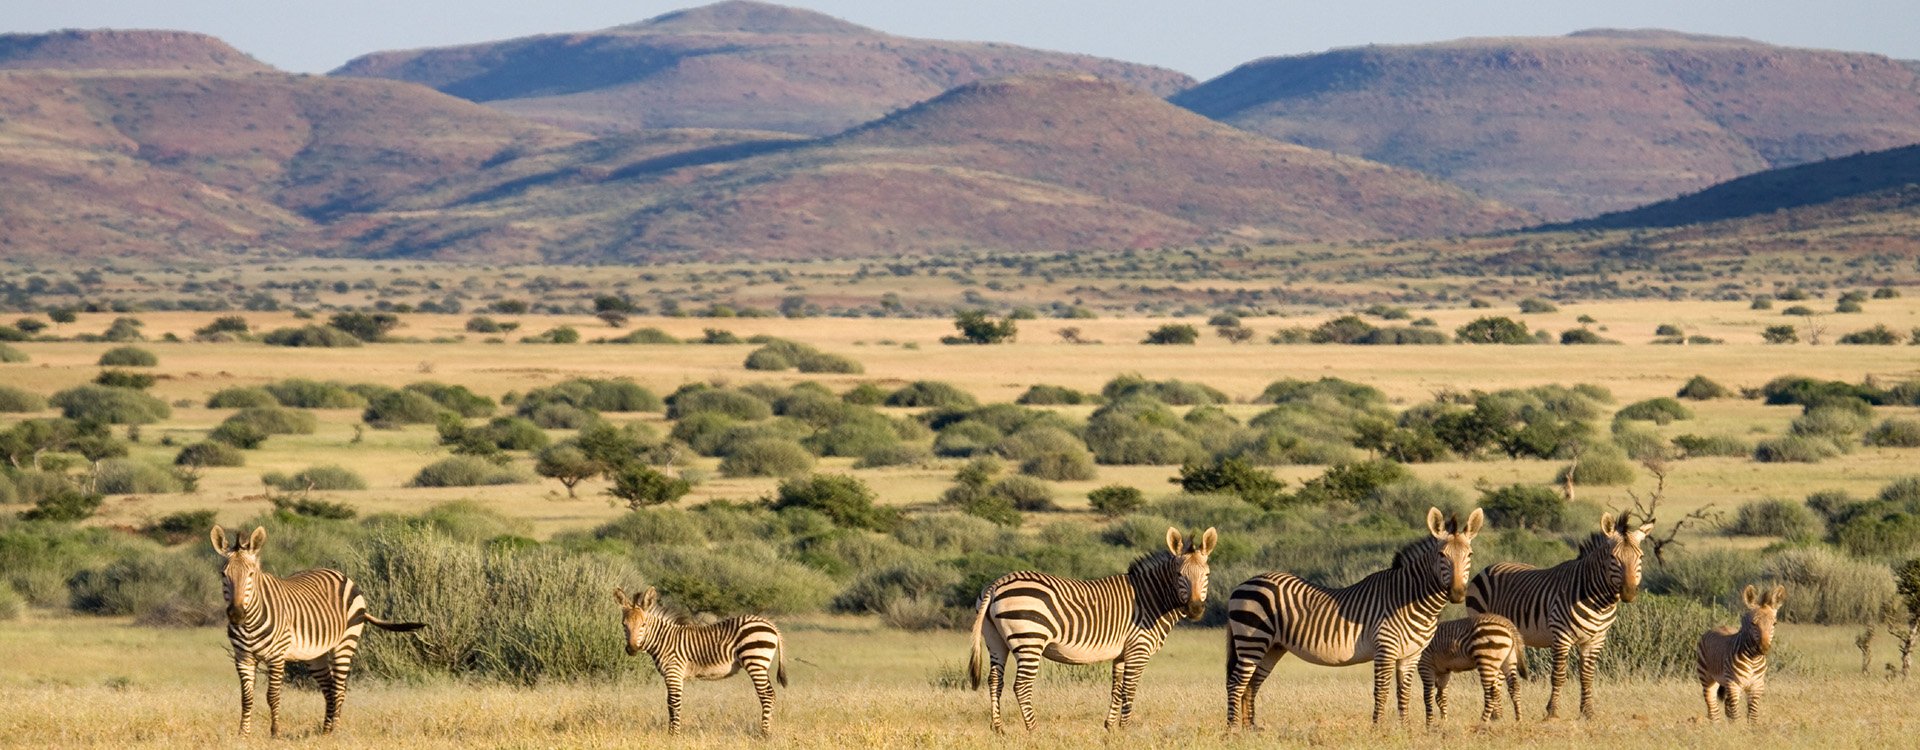 Namibia_Damaraland_Mountain zebra_iStock_000009327284